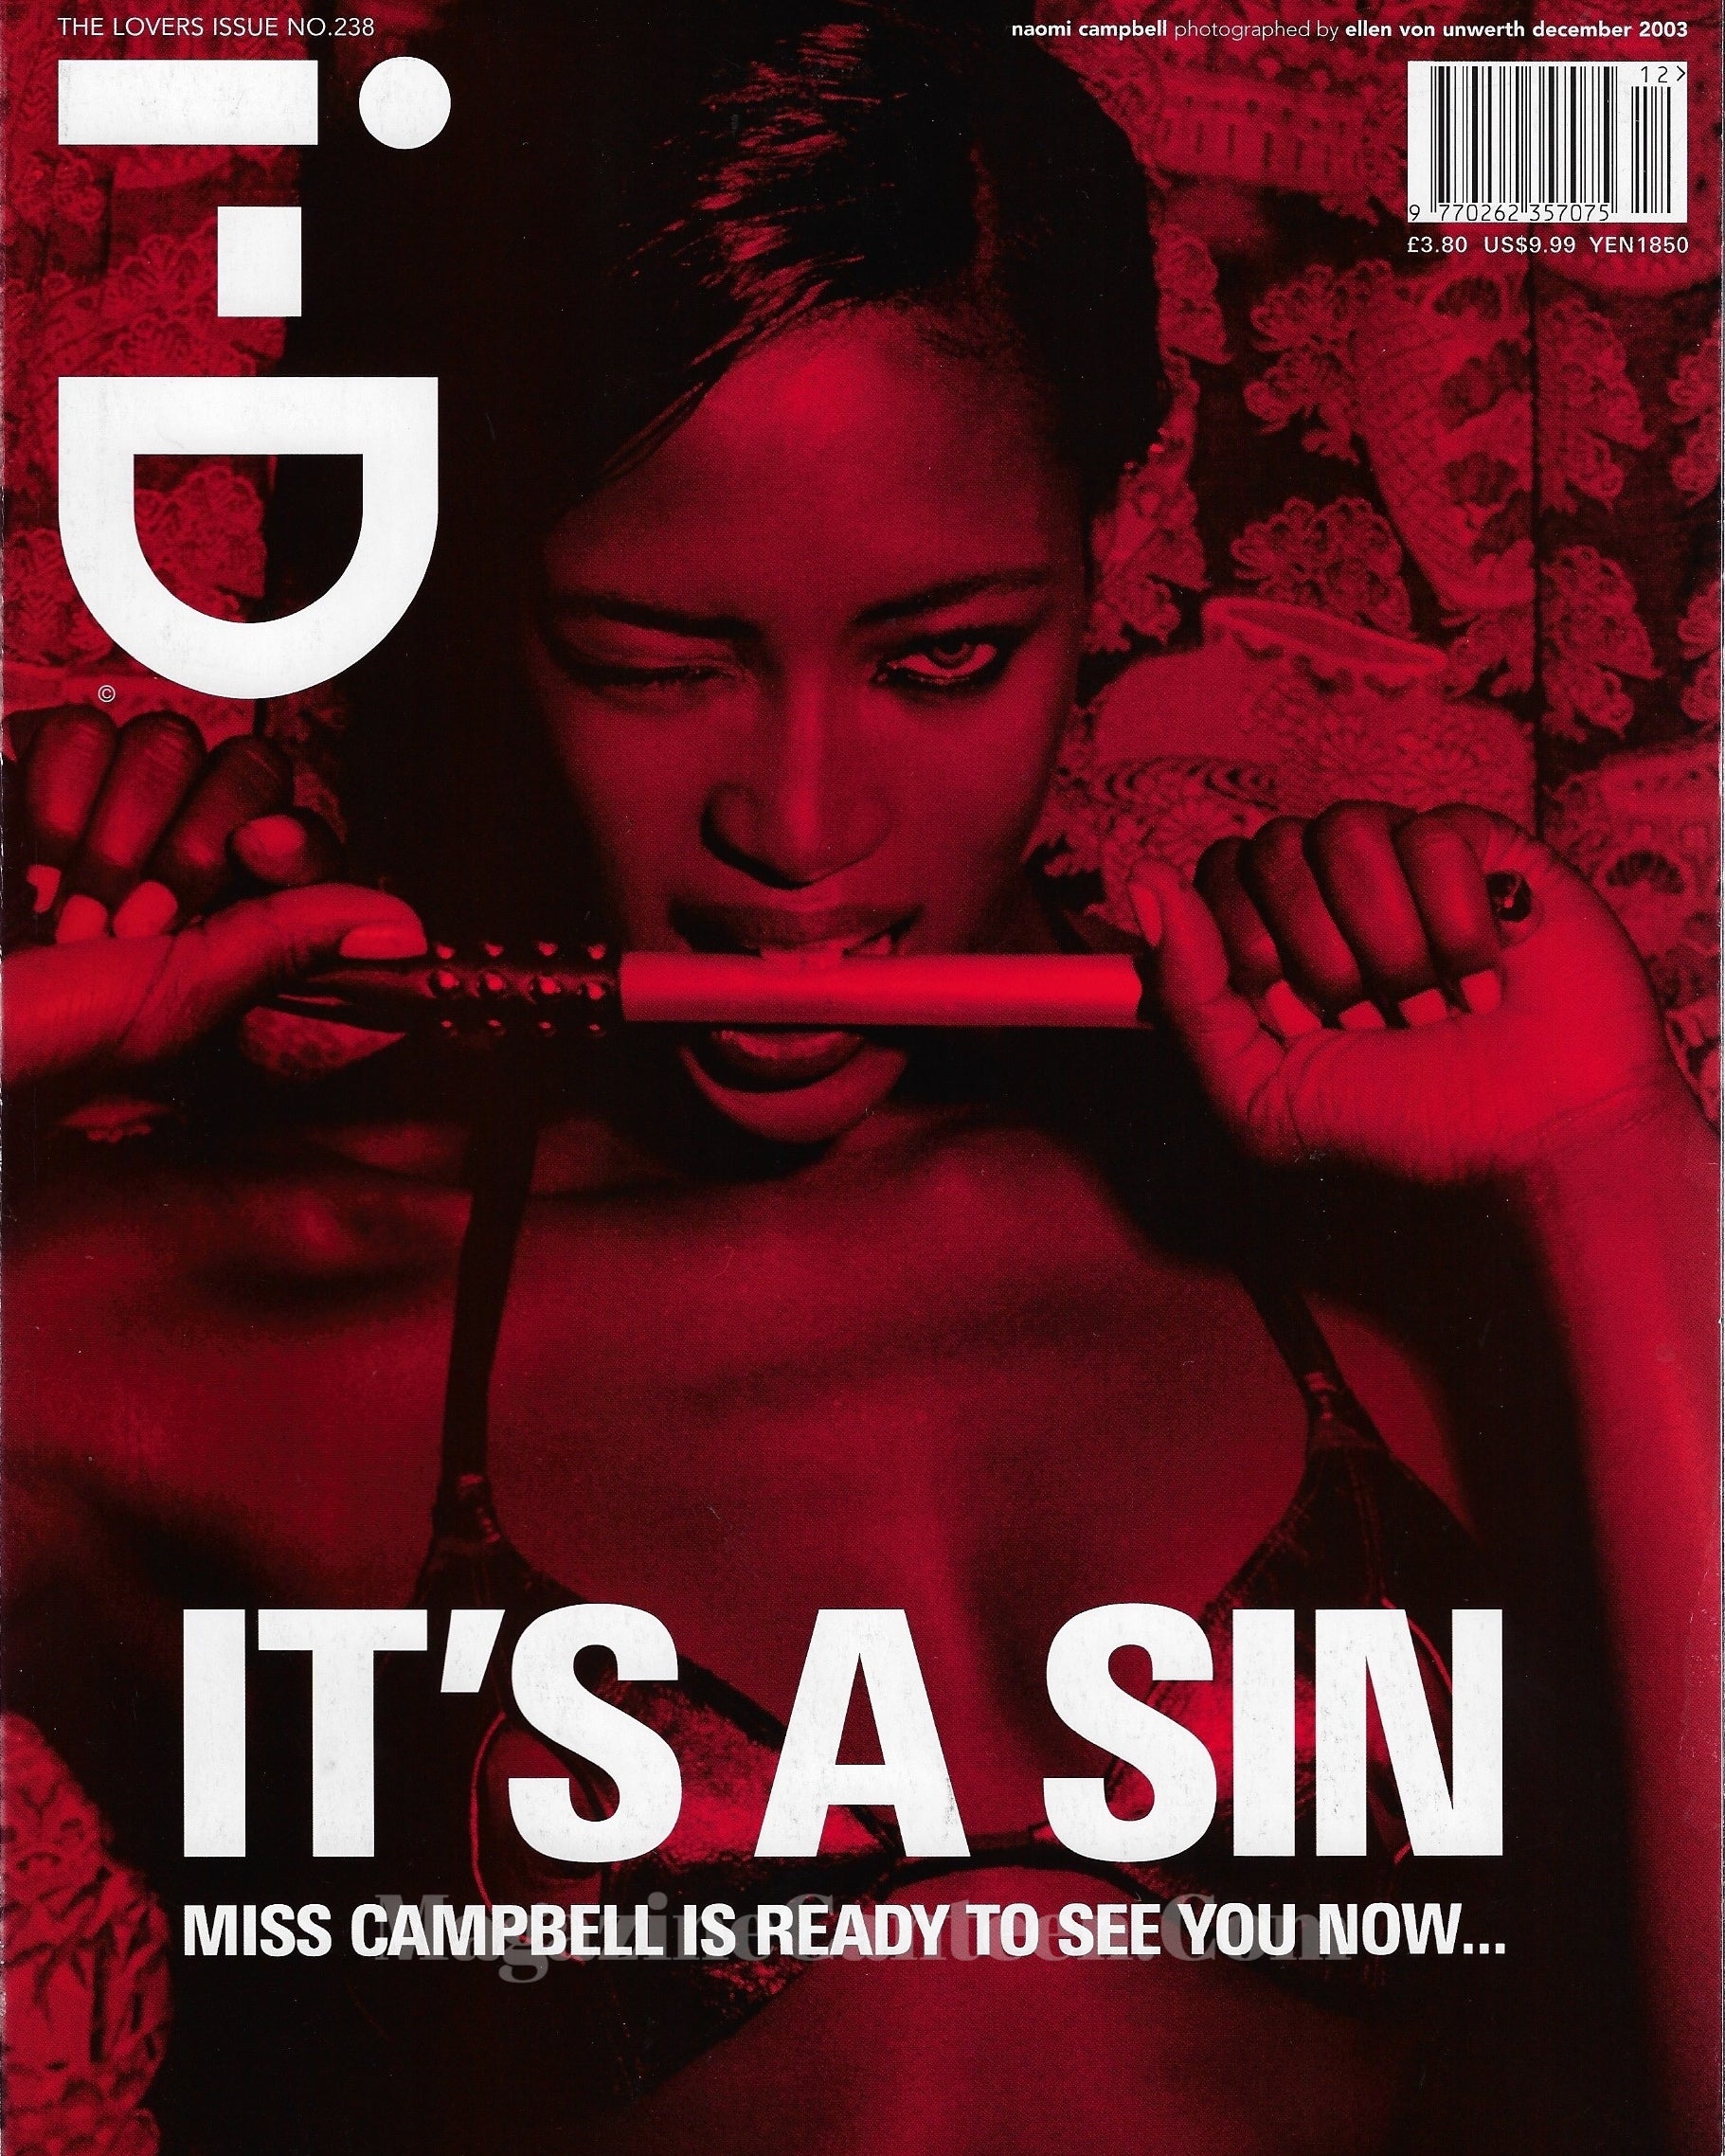 I-D Magazine 238 - Naomi Campbell 2003